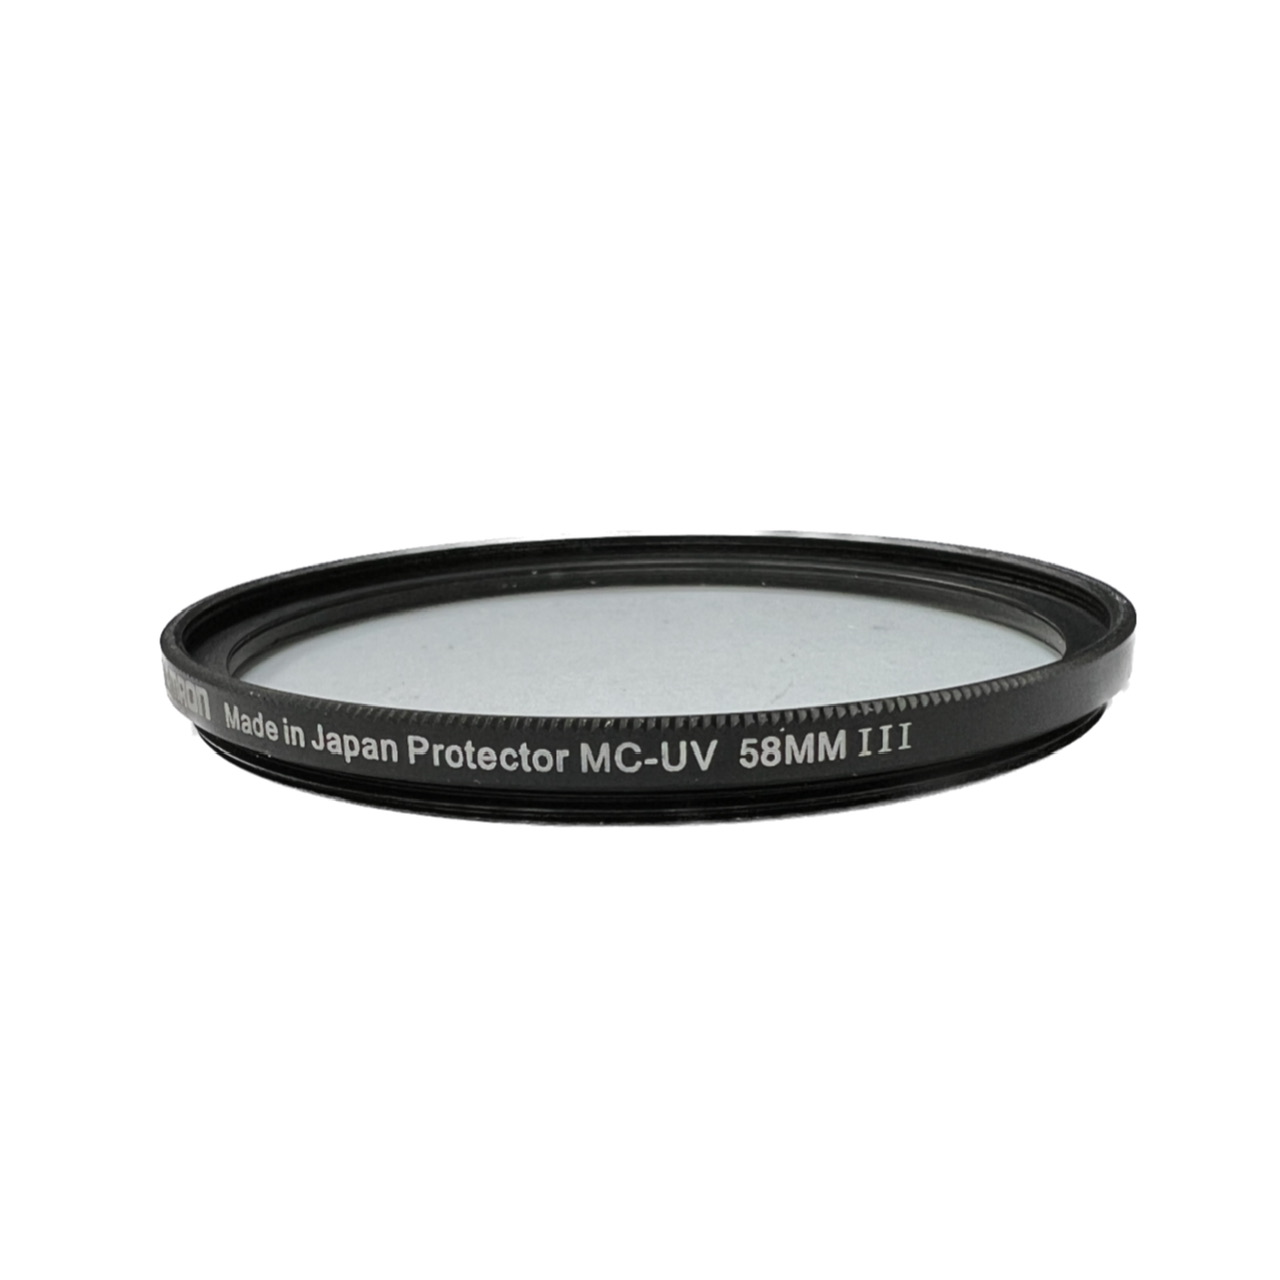 فیلتر لنز تامرون مدل MC-UV 58mm